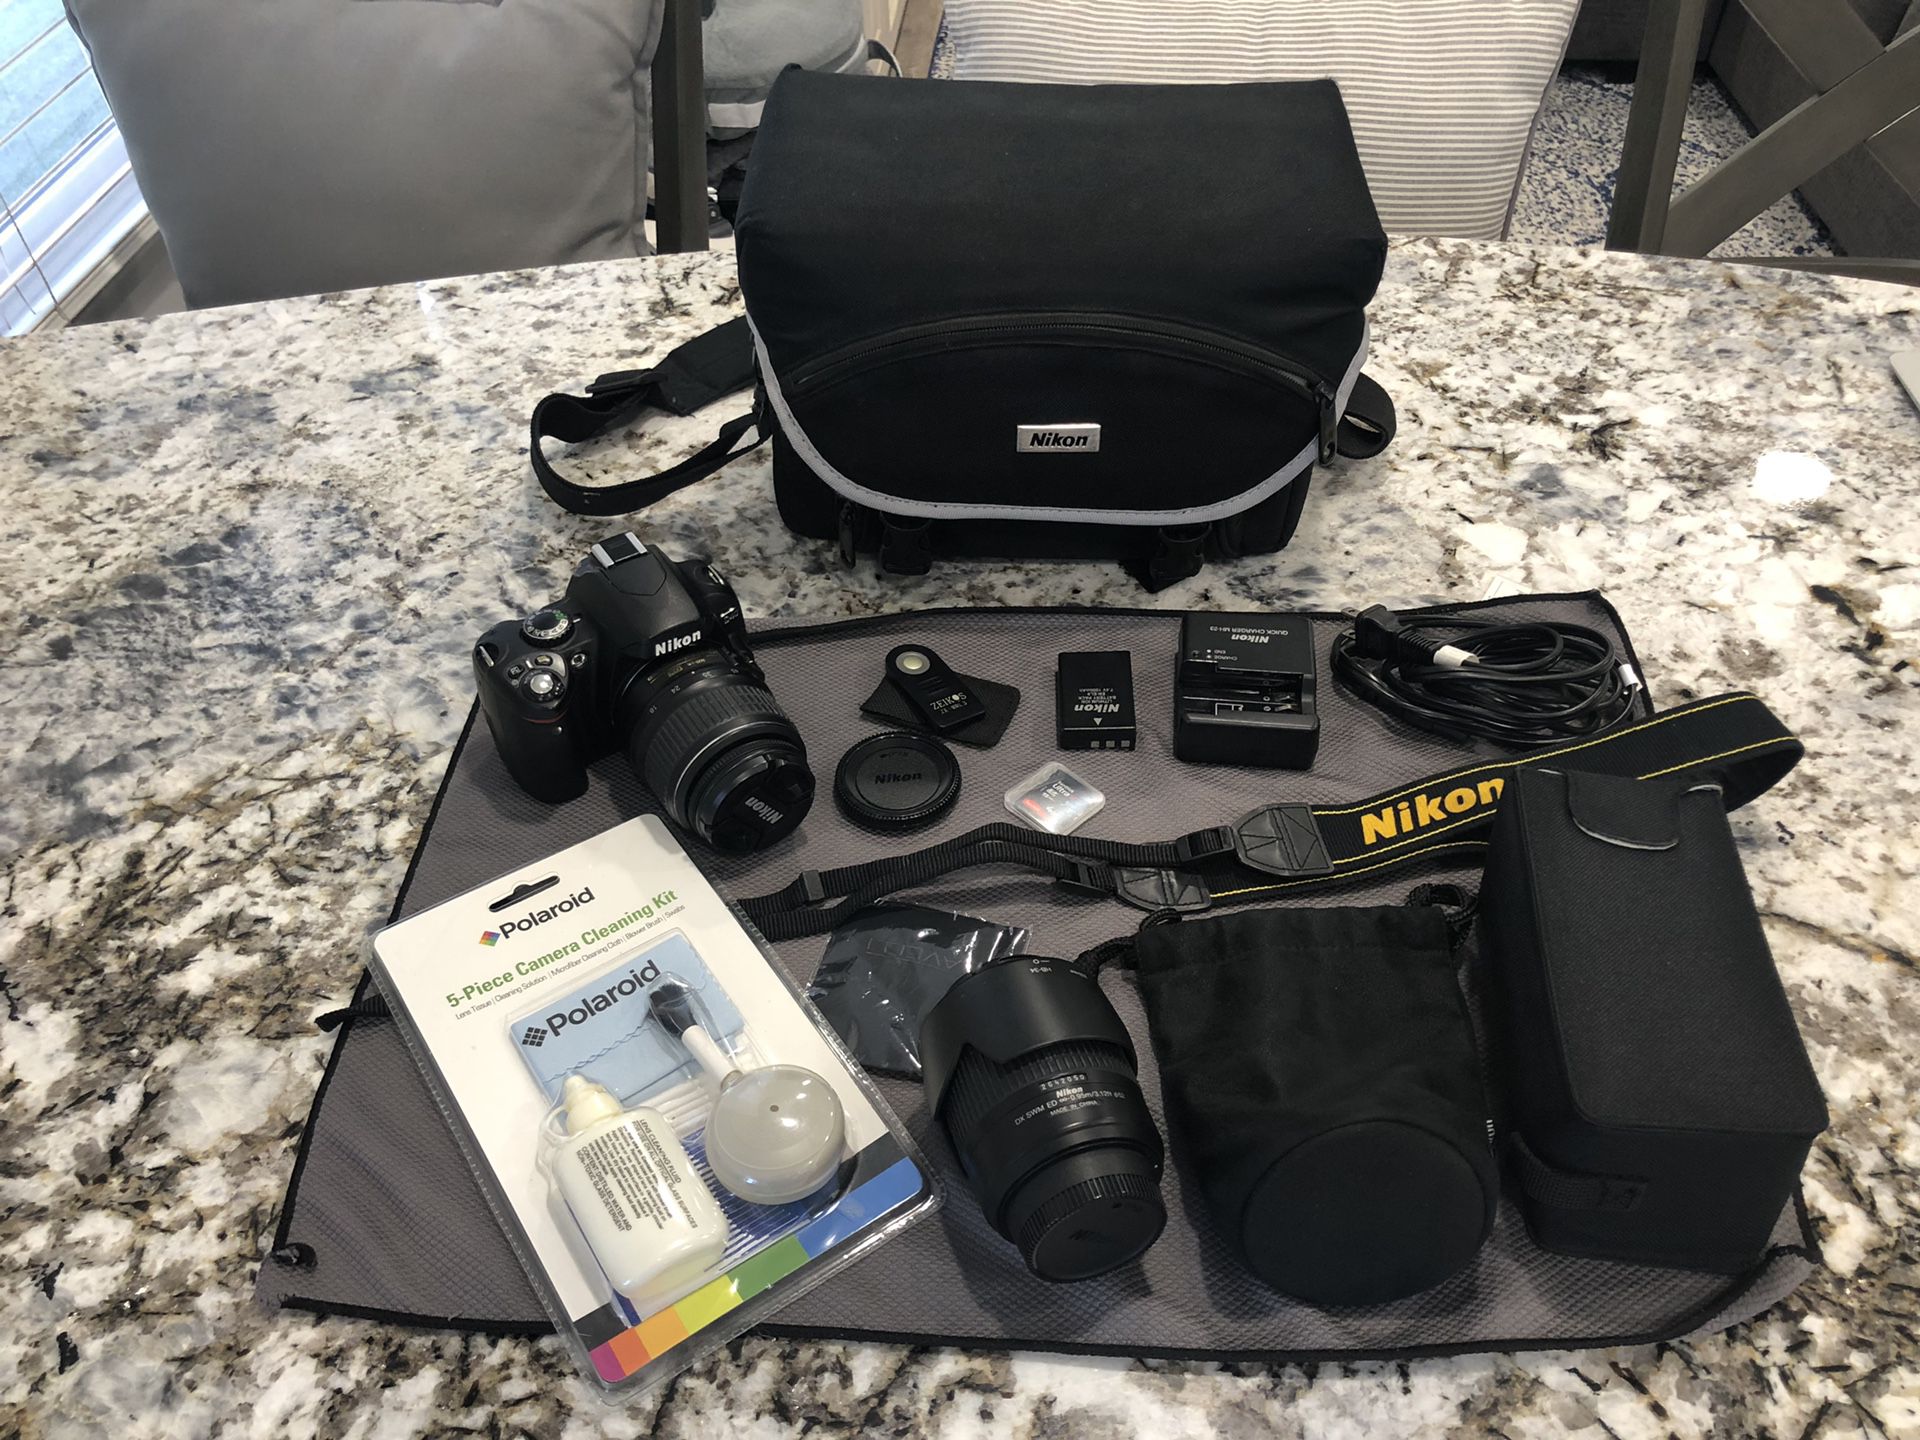 Nikon D40 6.1MP Digital SLR Camera Kit